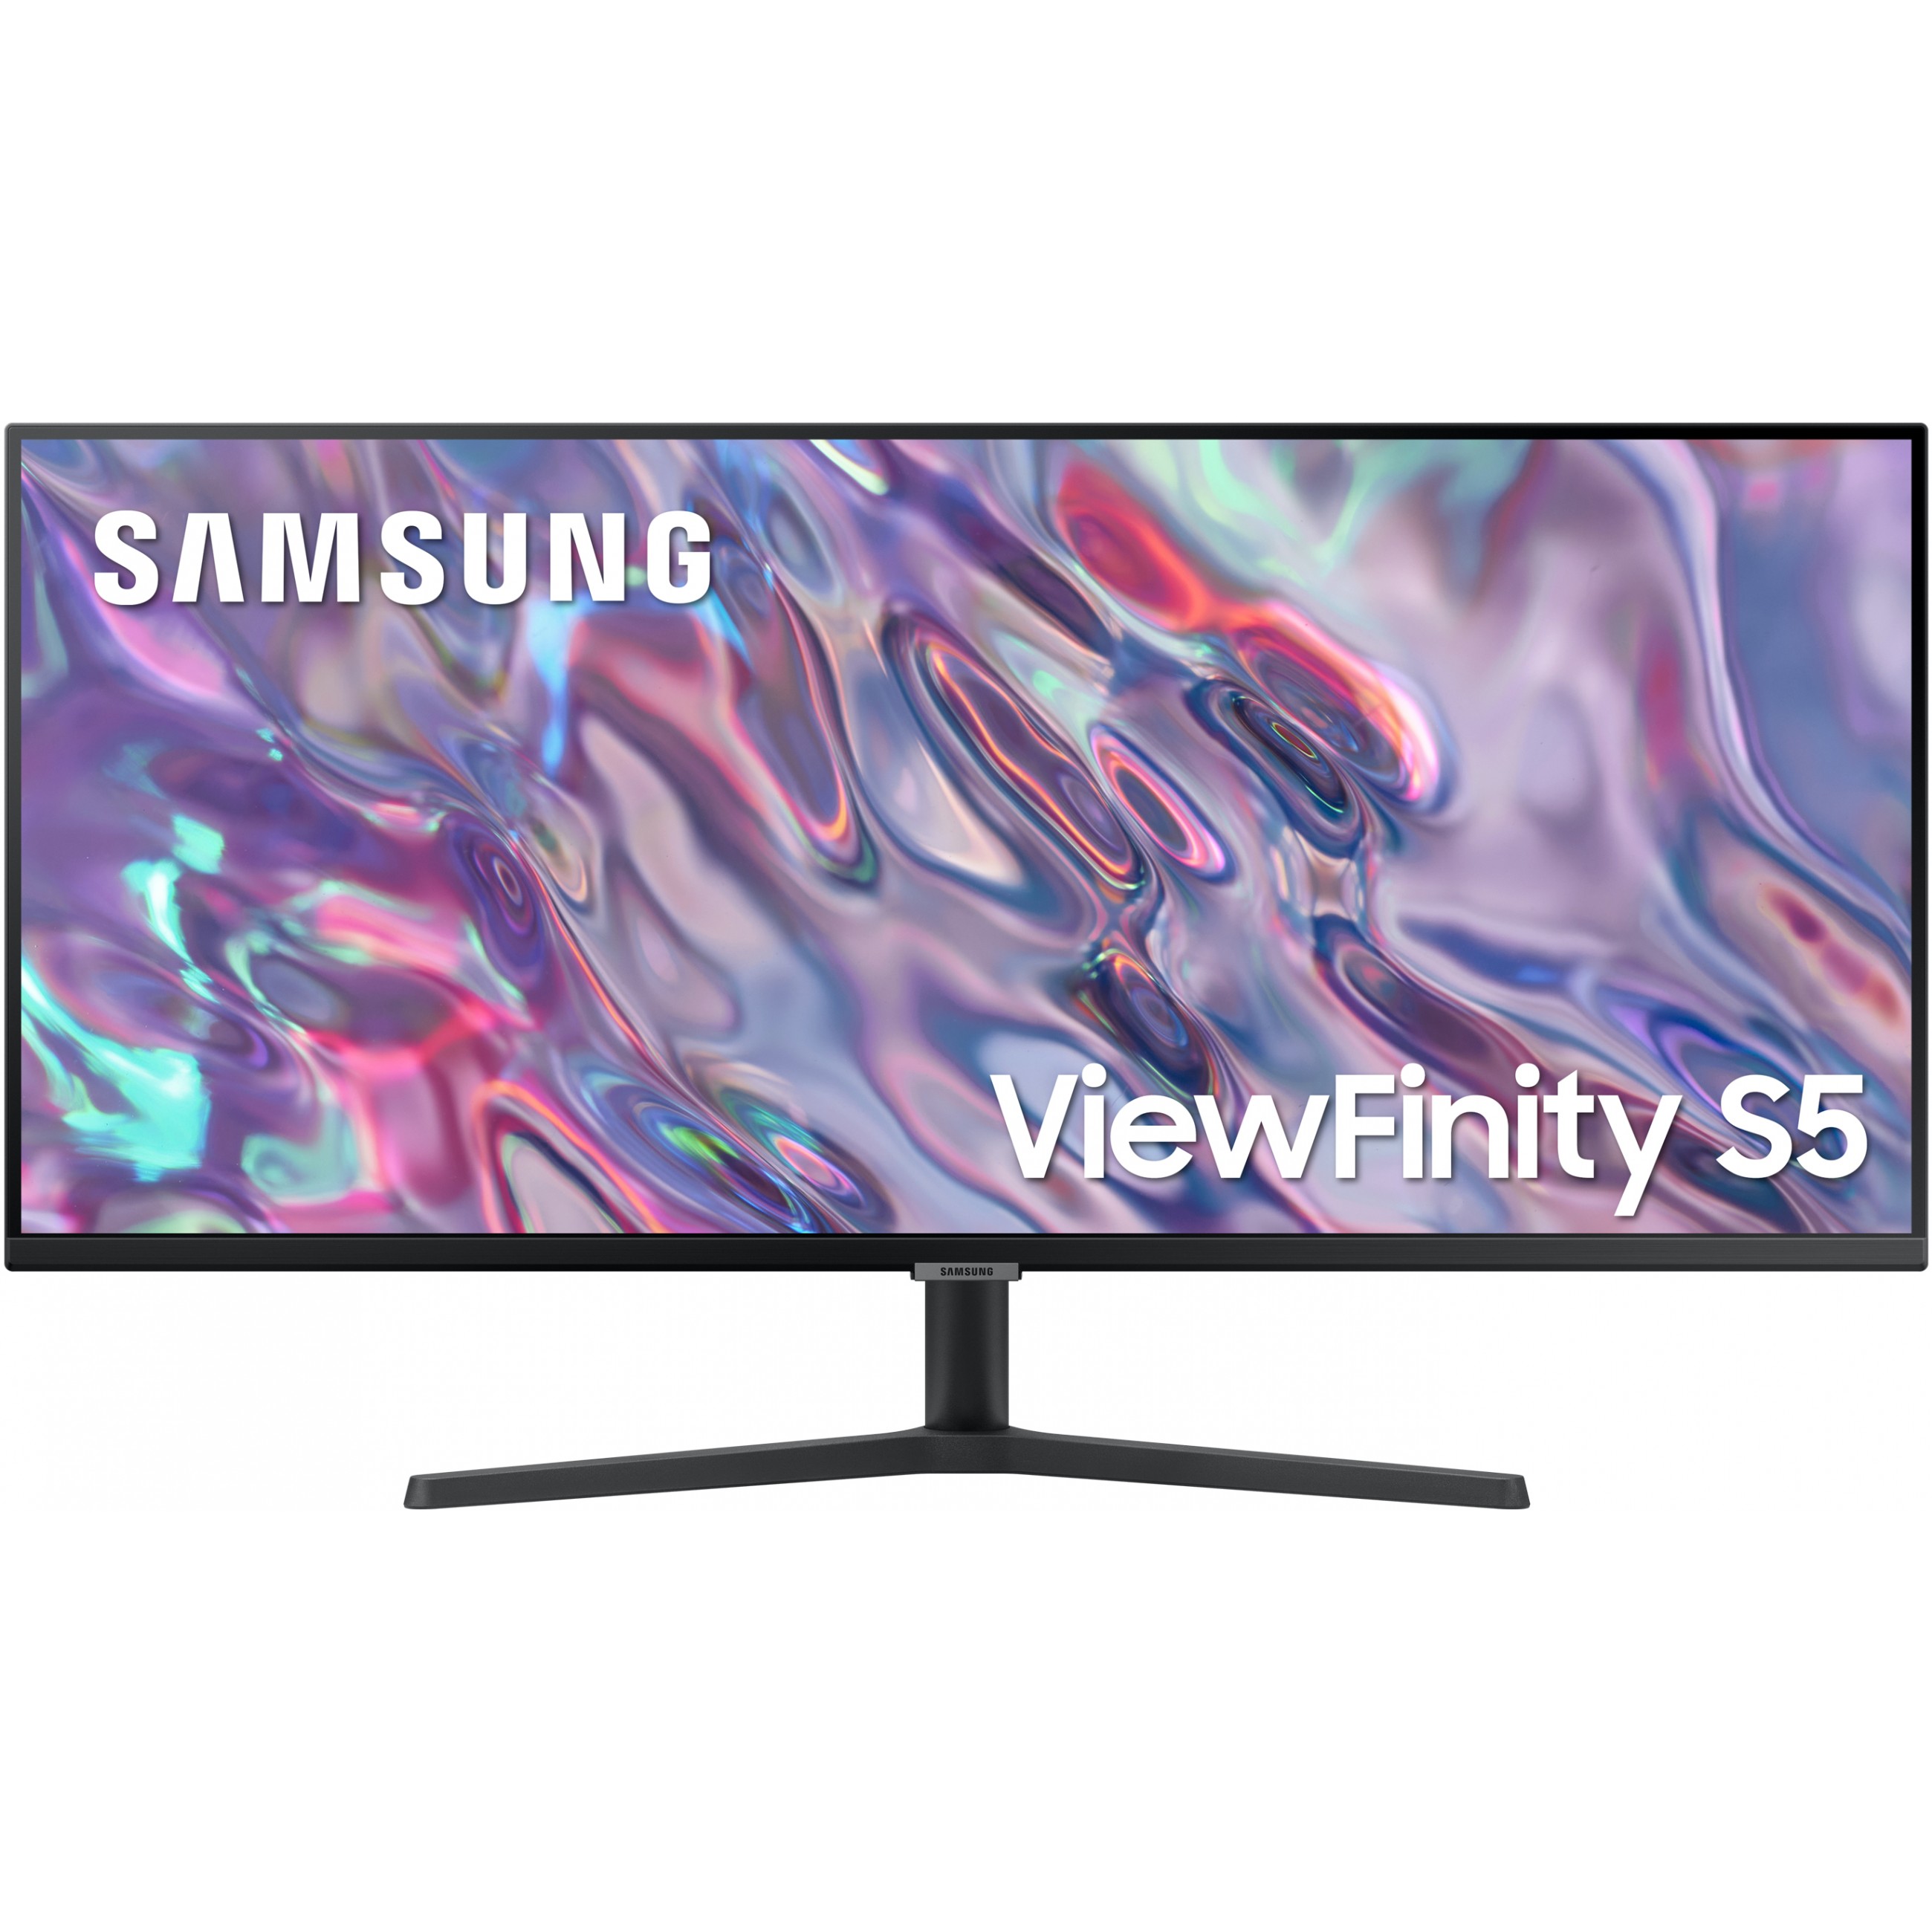 Samsung ViewFinity S5 S50GC computer monitor